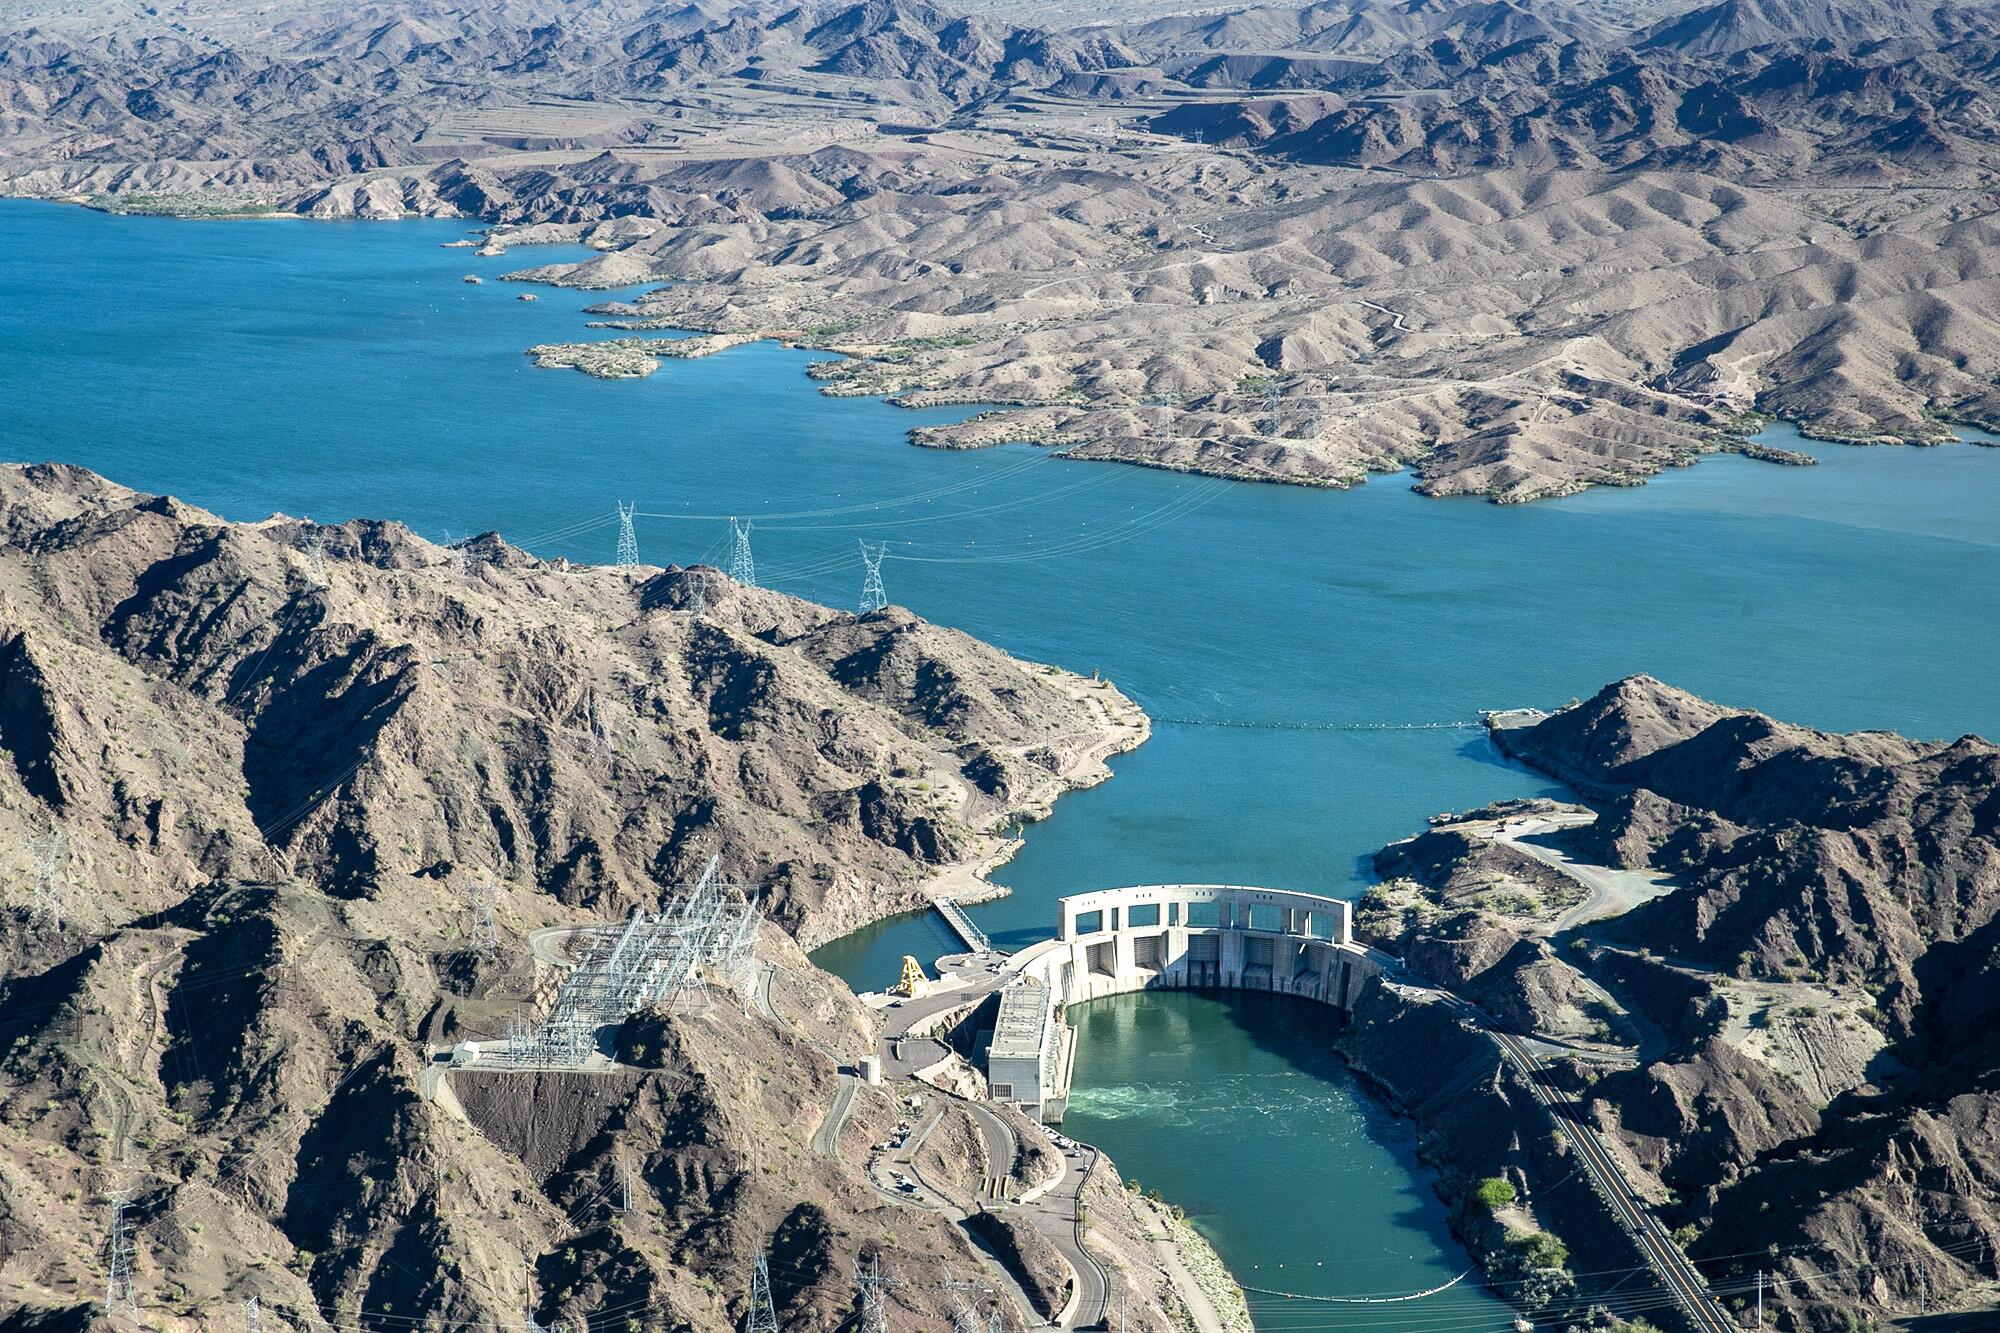 Parker Dam spans the Colorado River between Arizona and California, creating Lake Havasu.